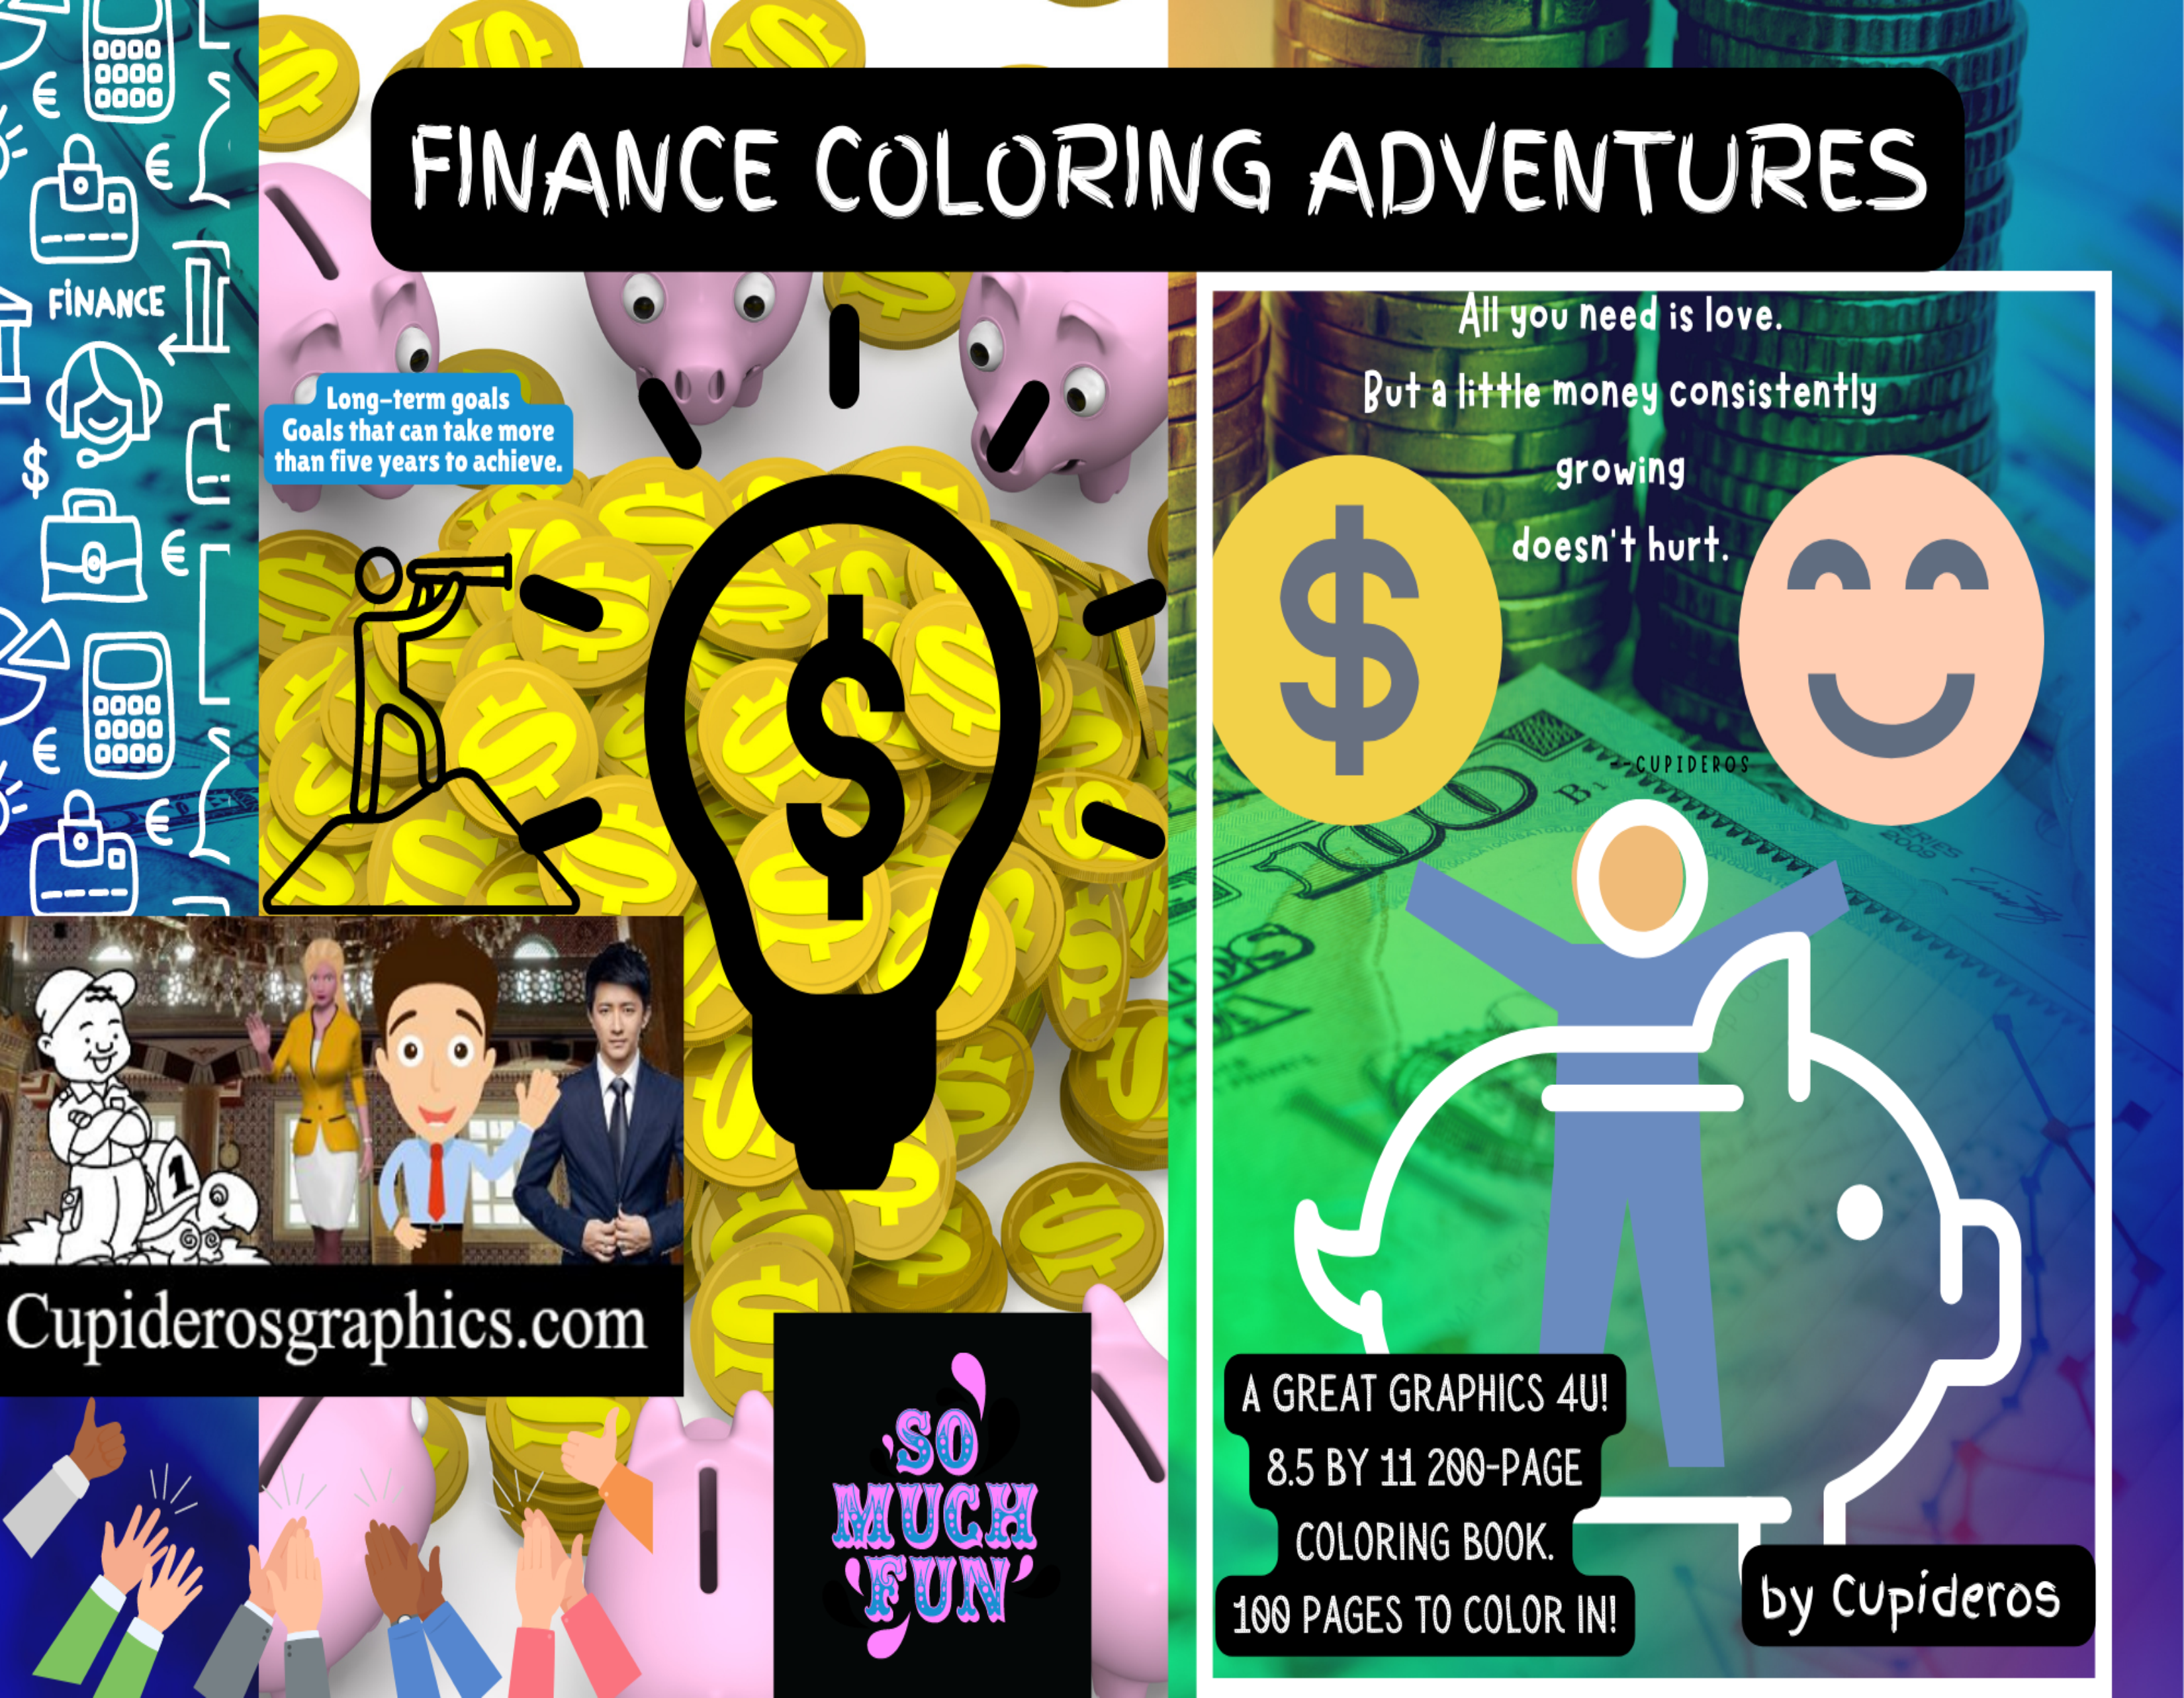 Finance Coloring Adventures!